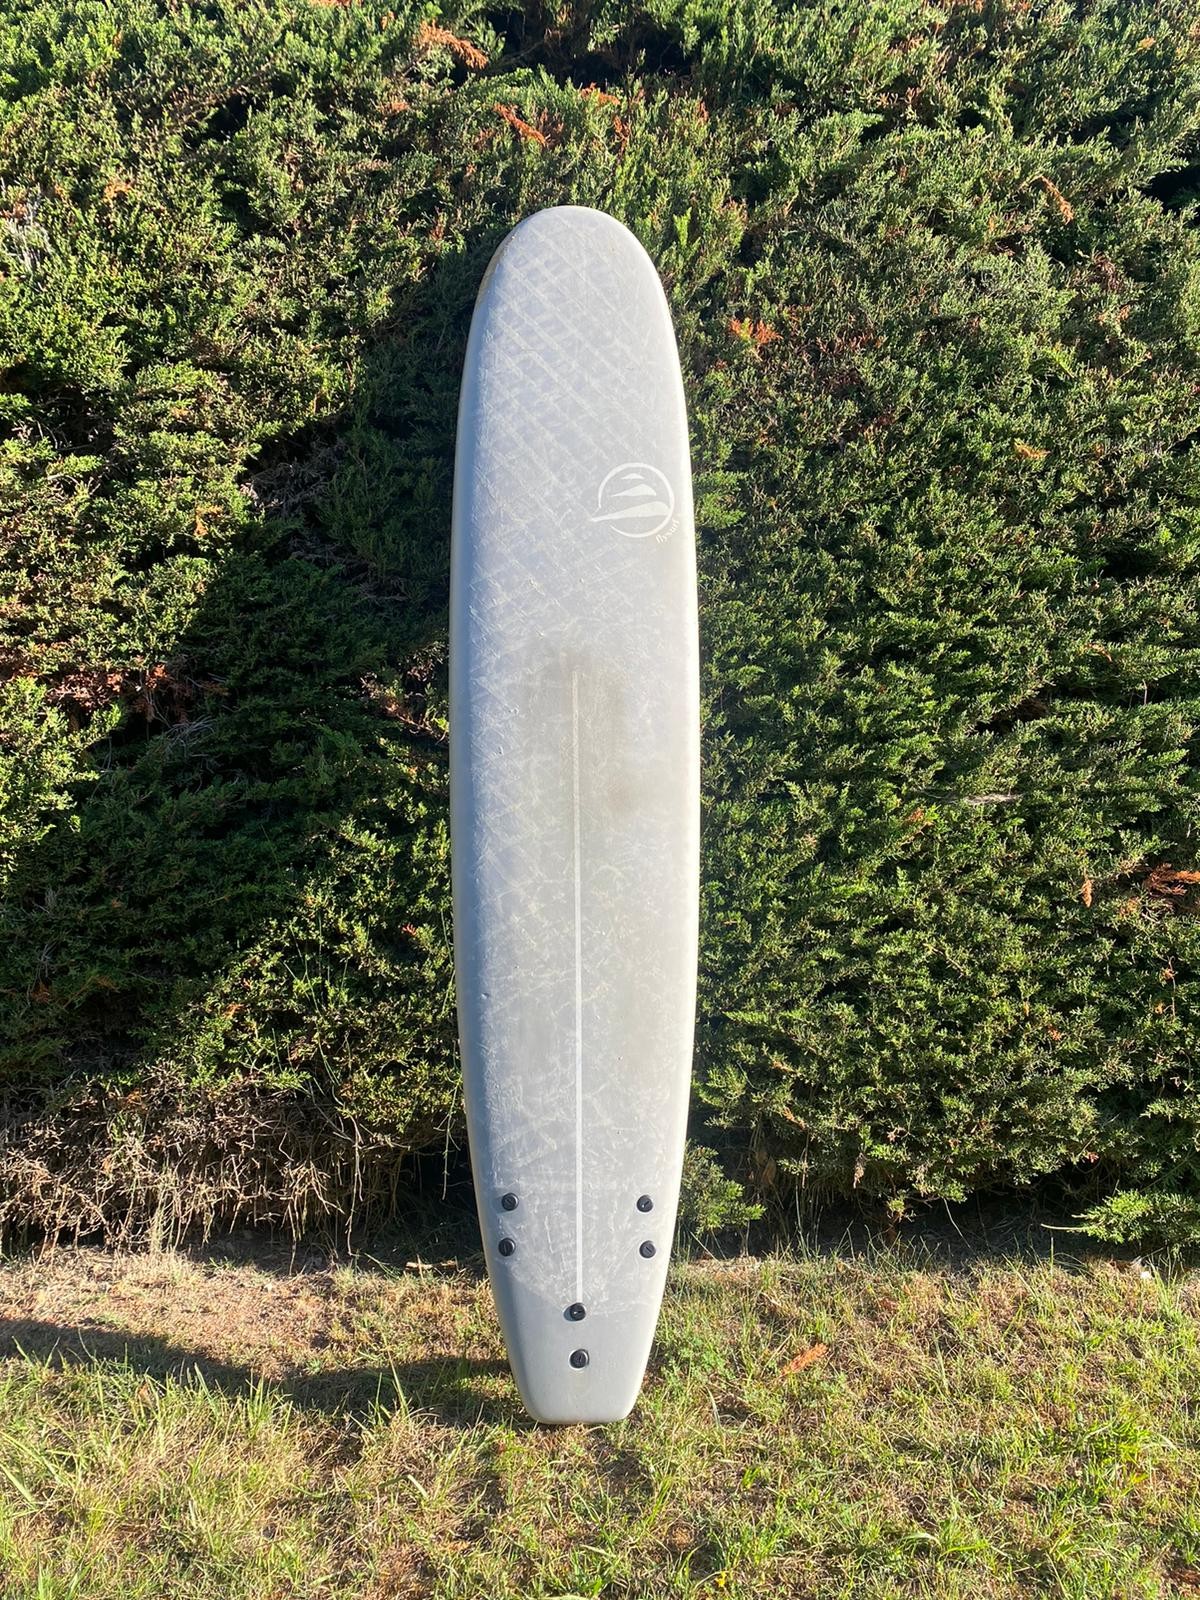 Tabla de surf Flysurf Longboard 9.2